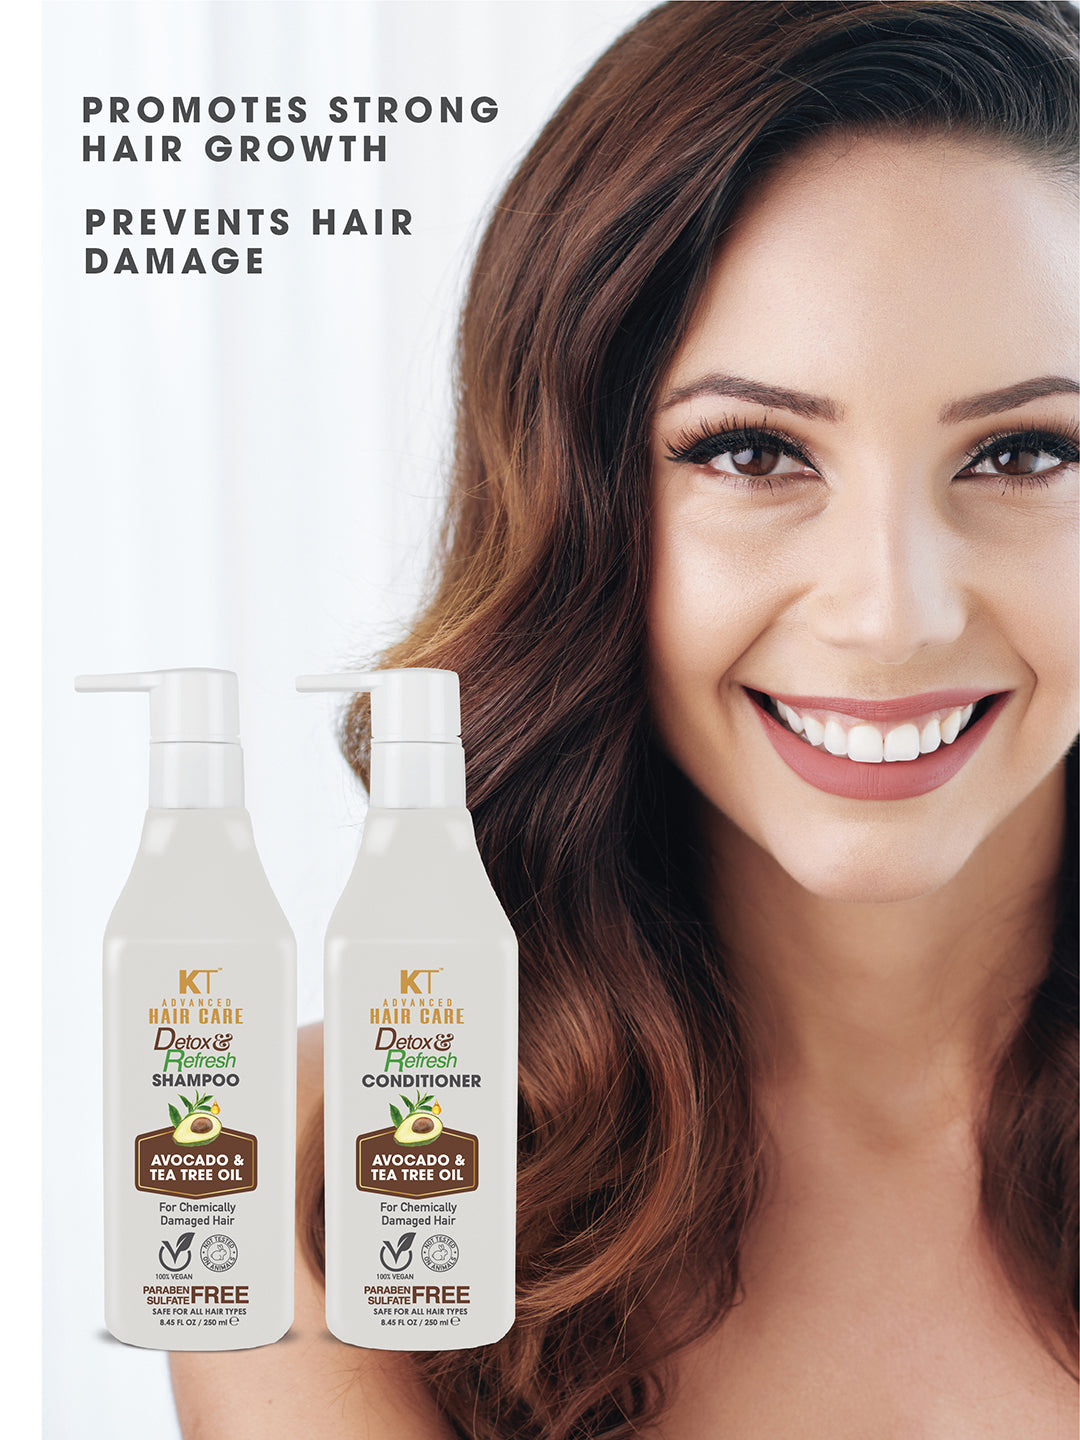 KT Professional Advanced Hair Care Detox &amp; Refresh Shampoo- 250 ml